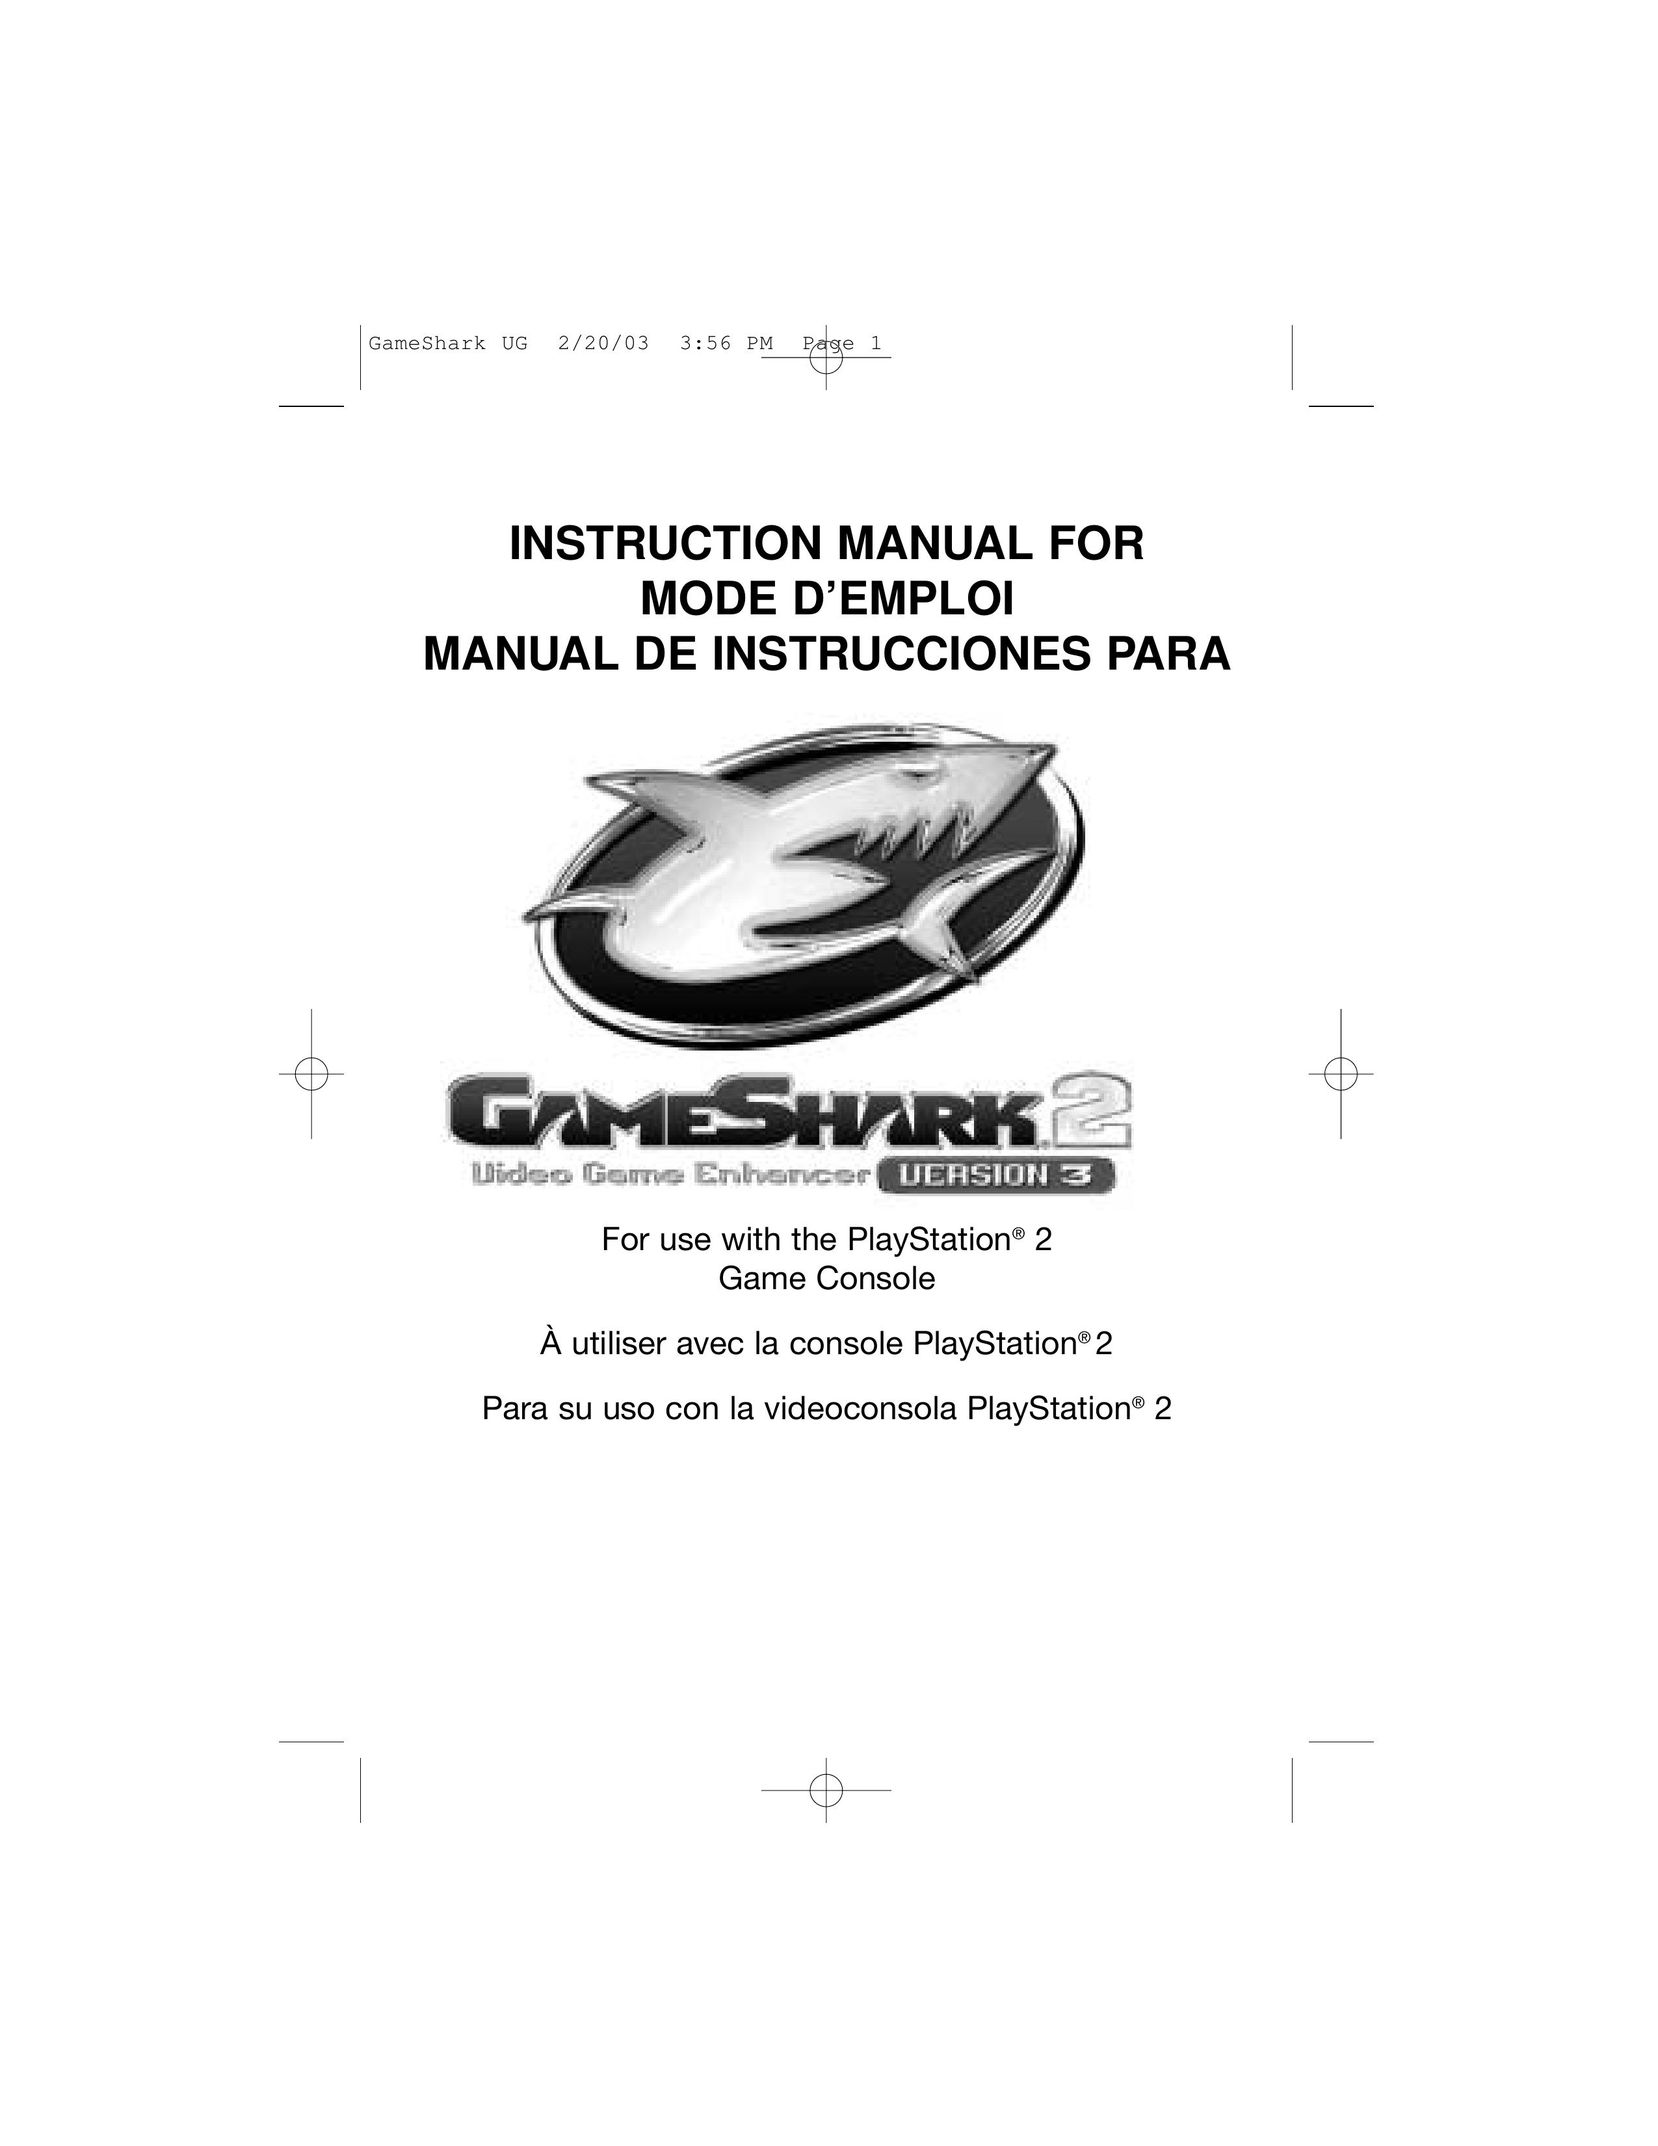 Mad Catz GameShark 2 Games User Manual